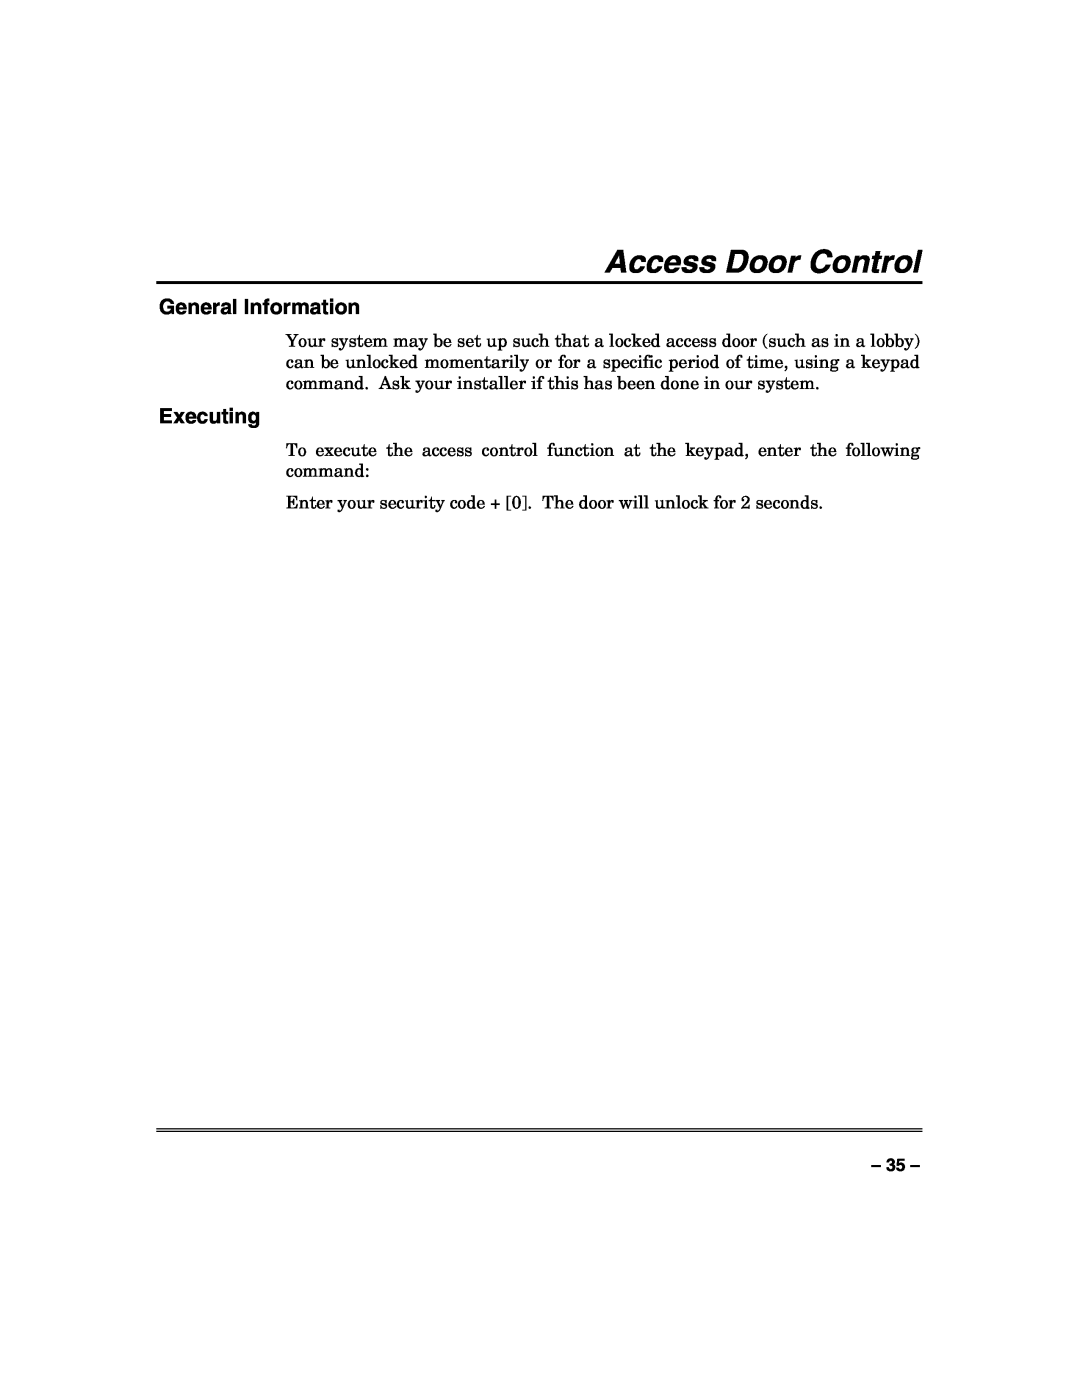 Honeywell N7003V3 manual Access Door Control, Executing, General Information 